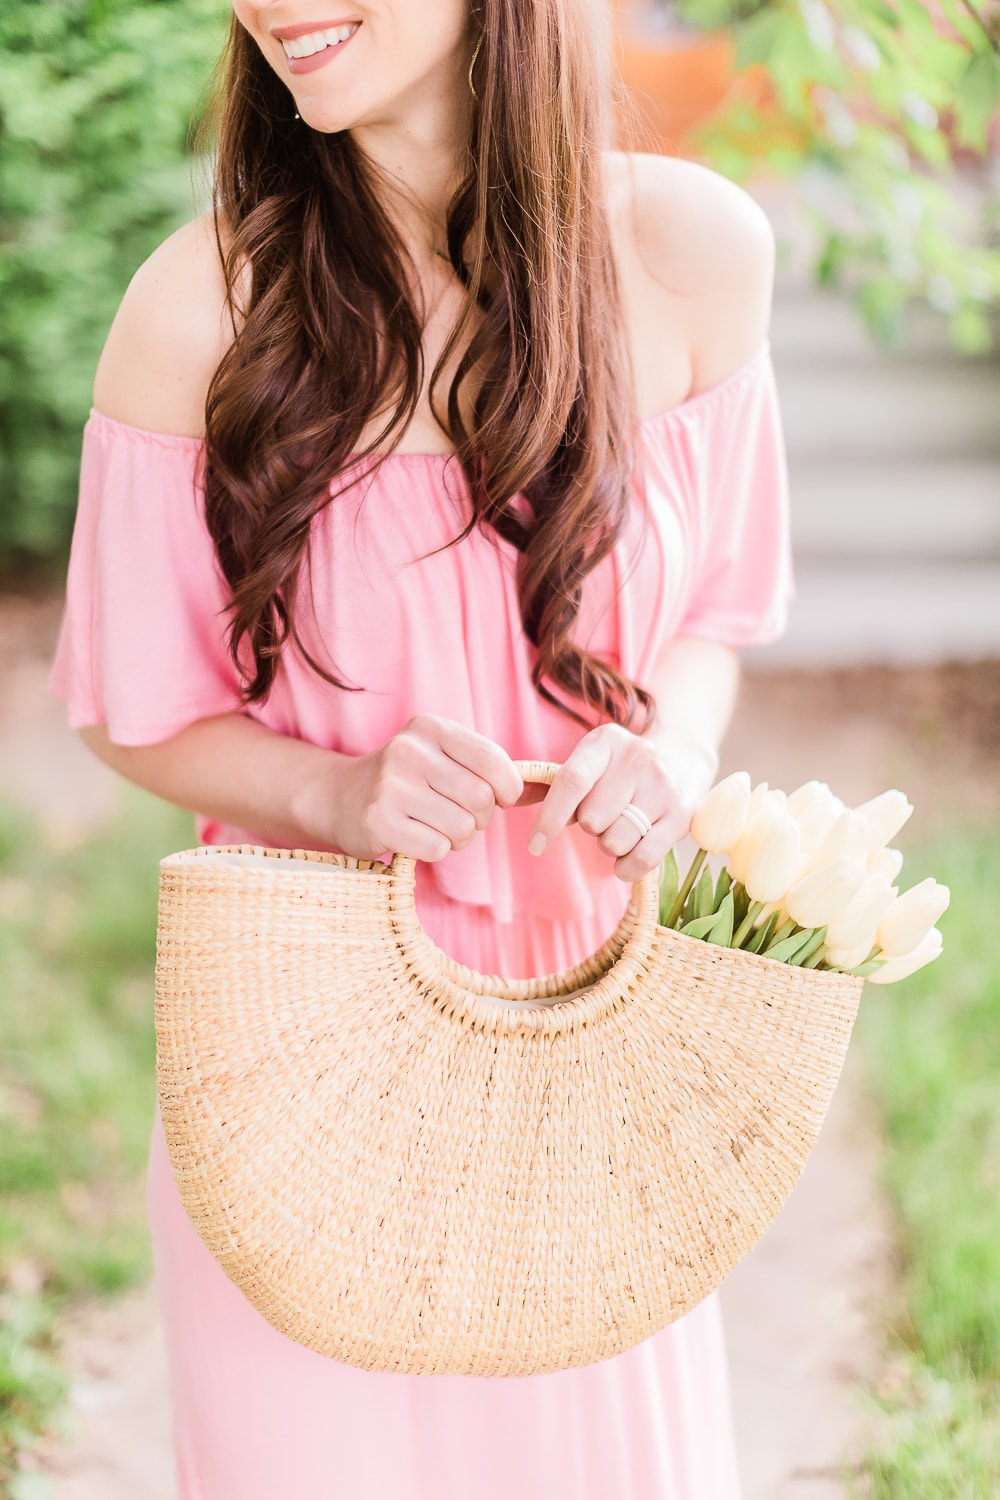 Amazon round handle straw handbag styled by affordable fashion blogger Stephanie Ziajka on Diary of a Debutante